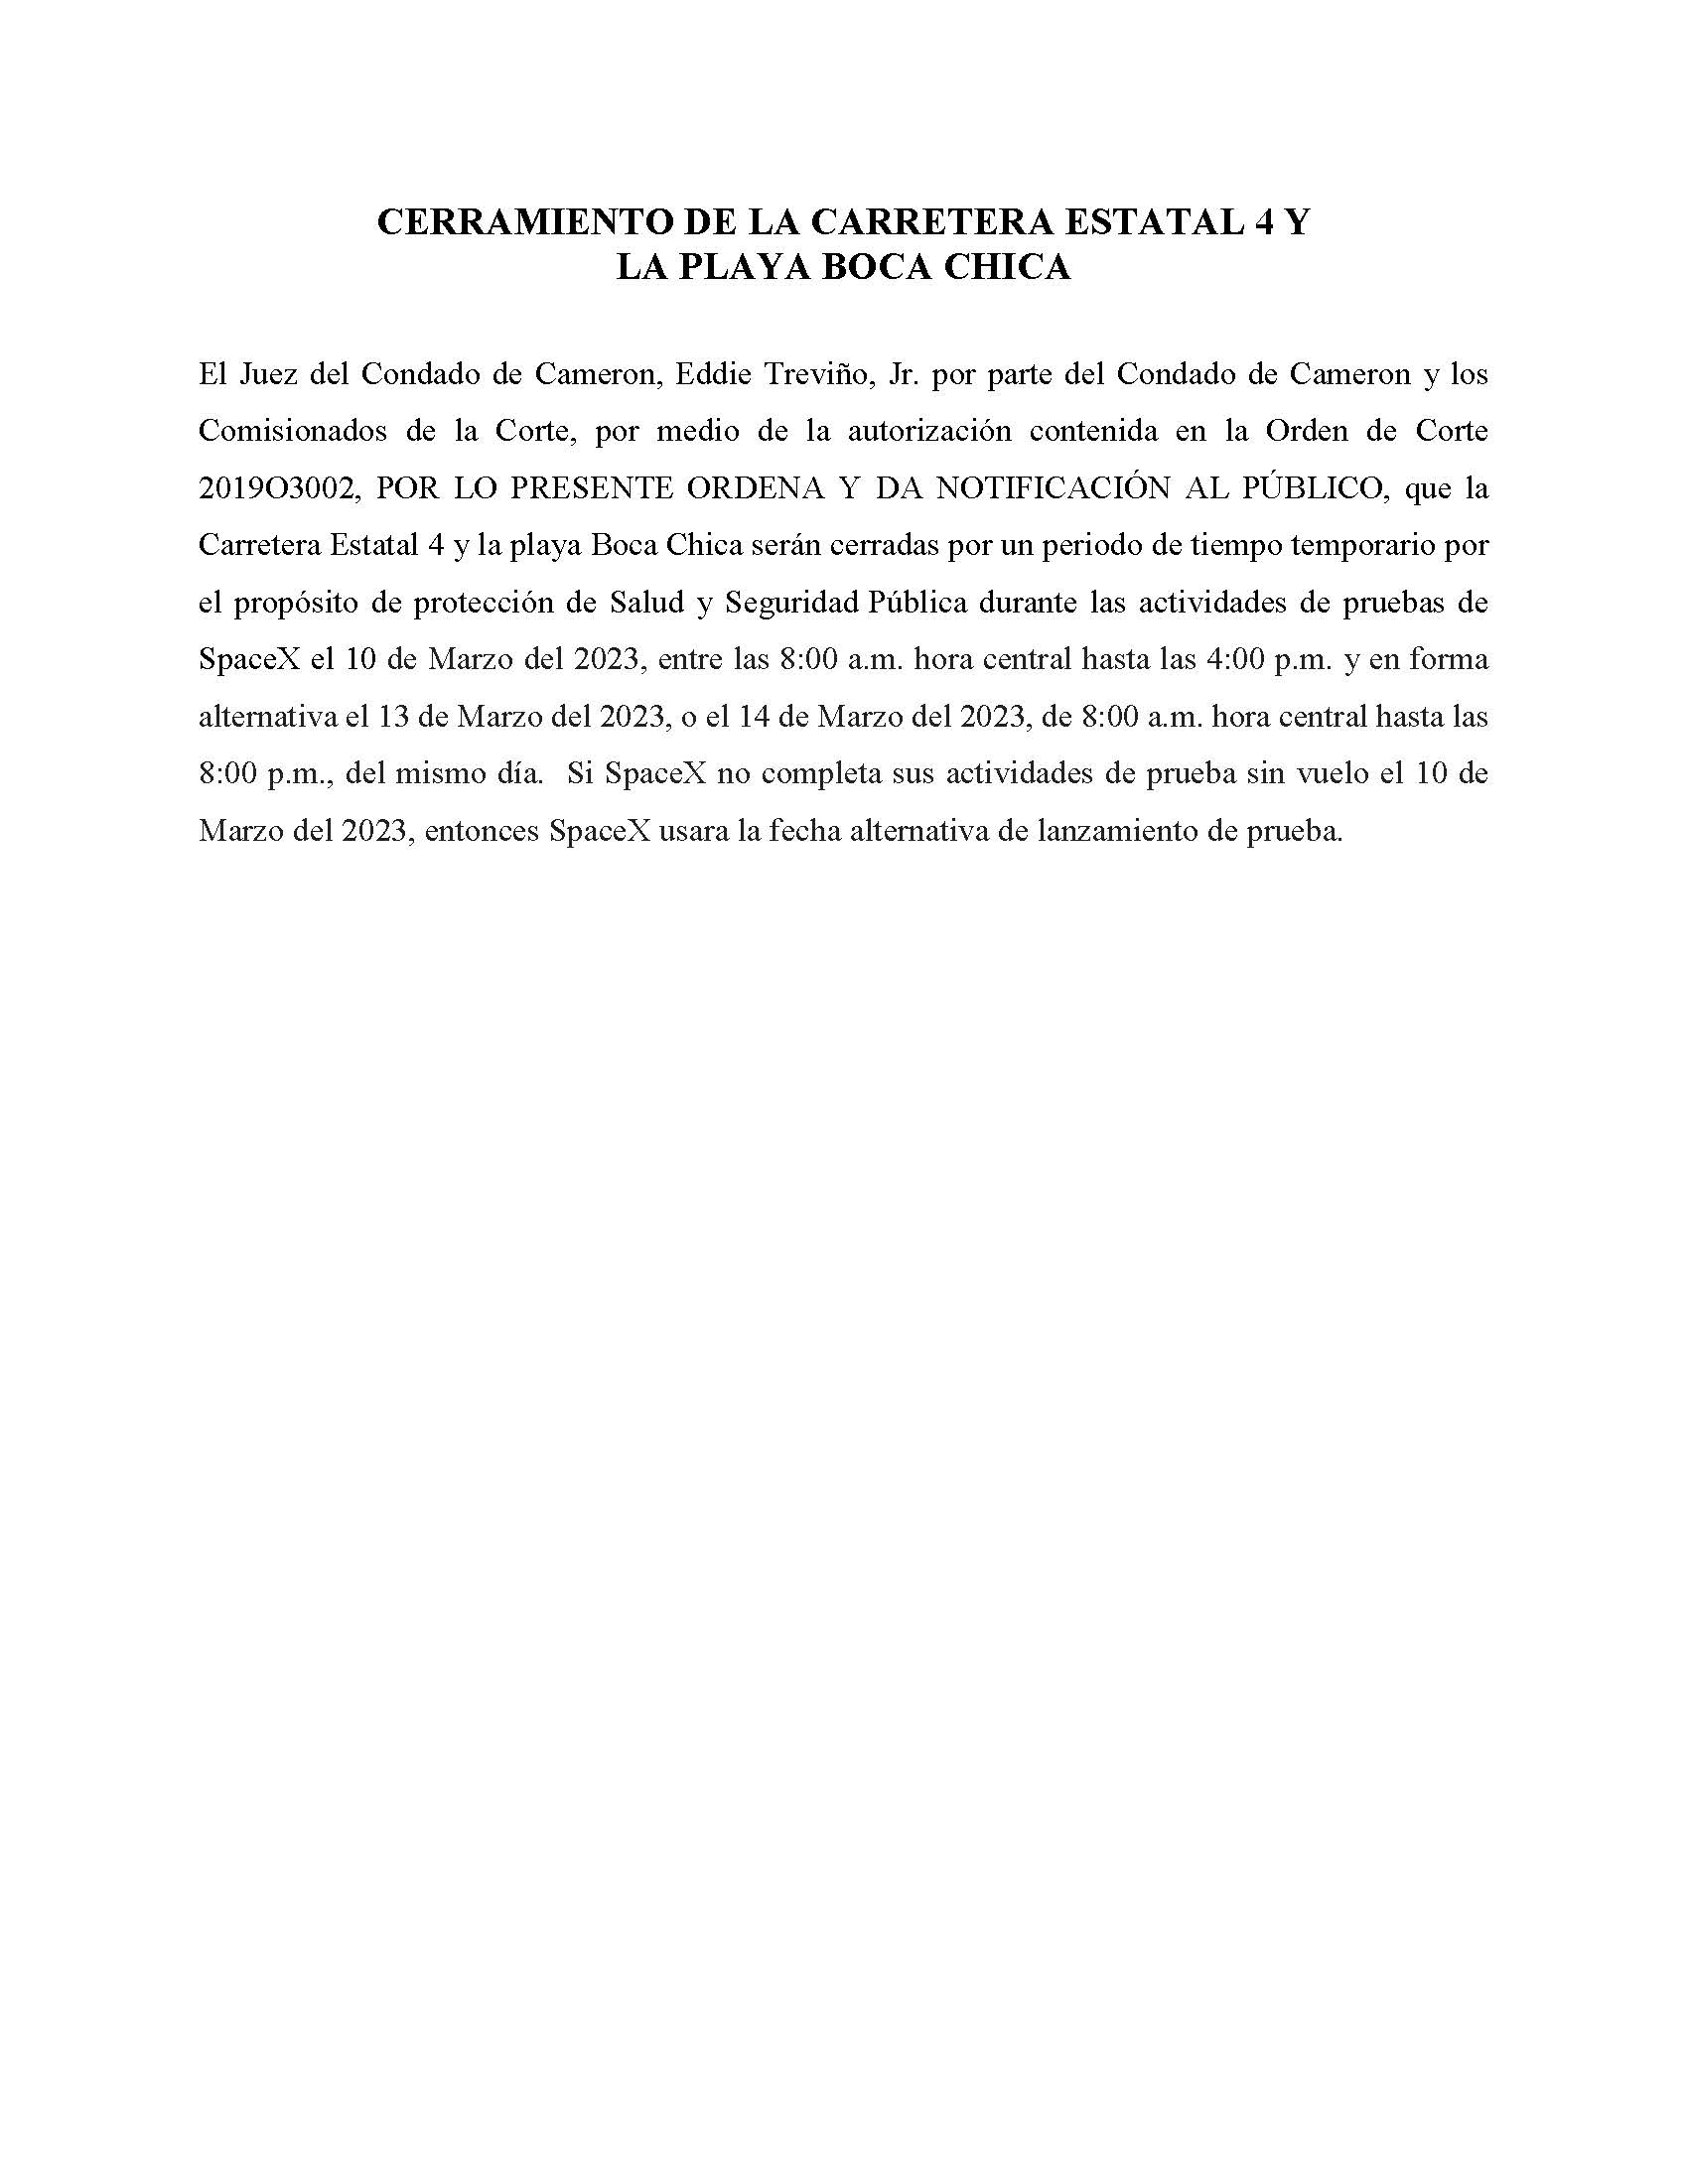 ORDER.CLOSURE OF HIGHWAY 4 Y LA PLAYA BOCA CHICA.SPANISH.03.10.23 1